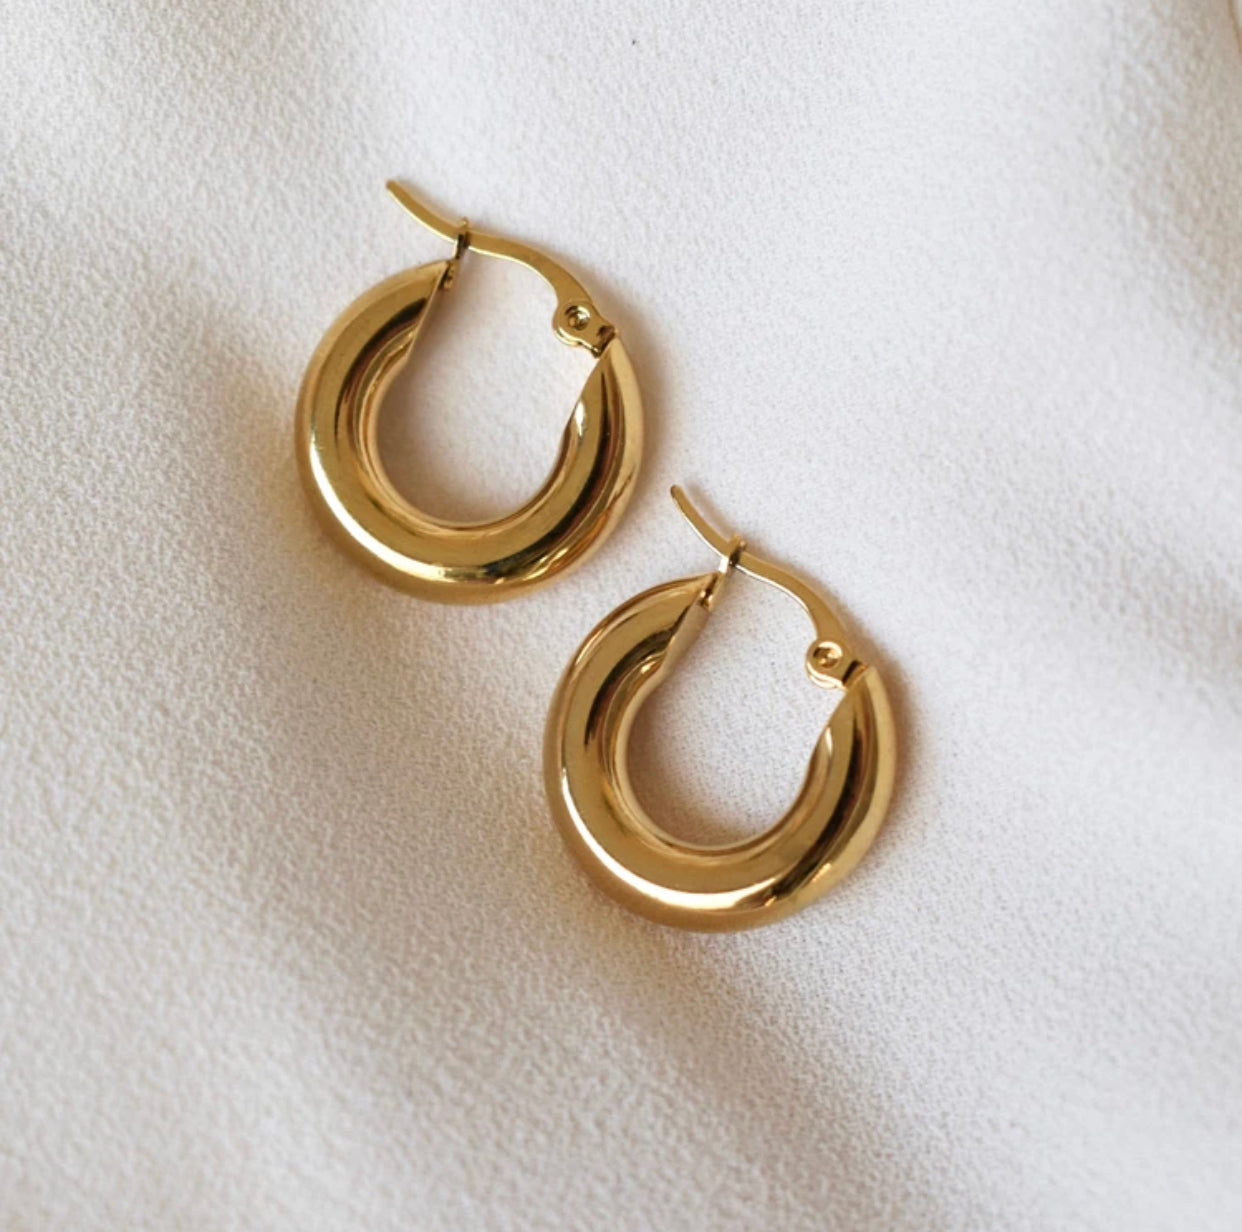 Brilliant Boston Hoop Earrings 20mm - Gold on Stainless Steel